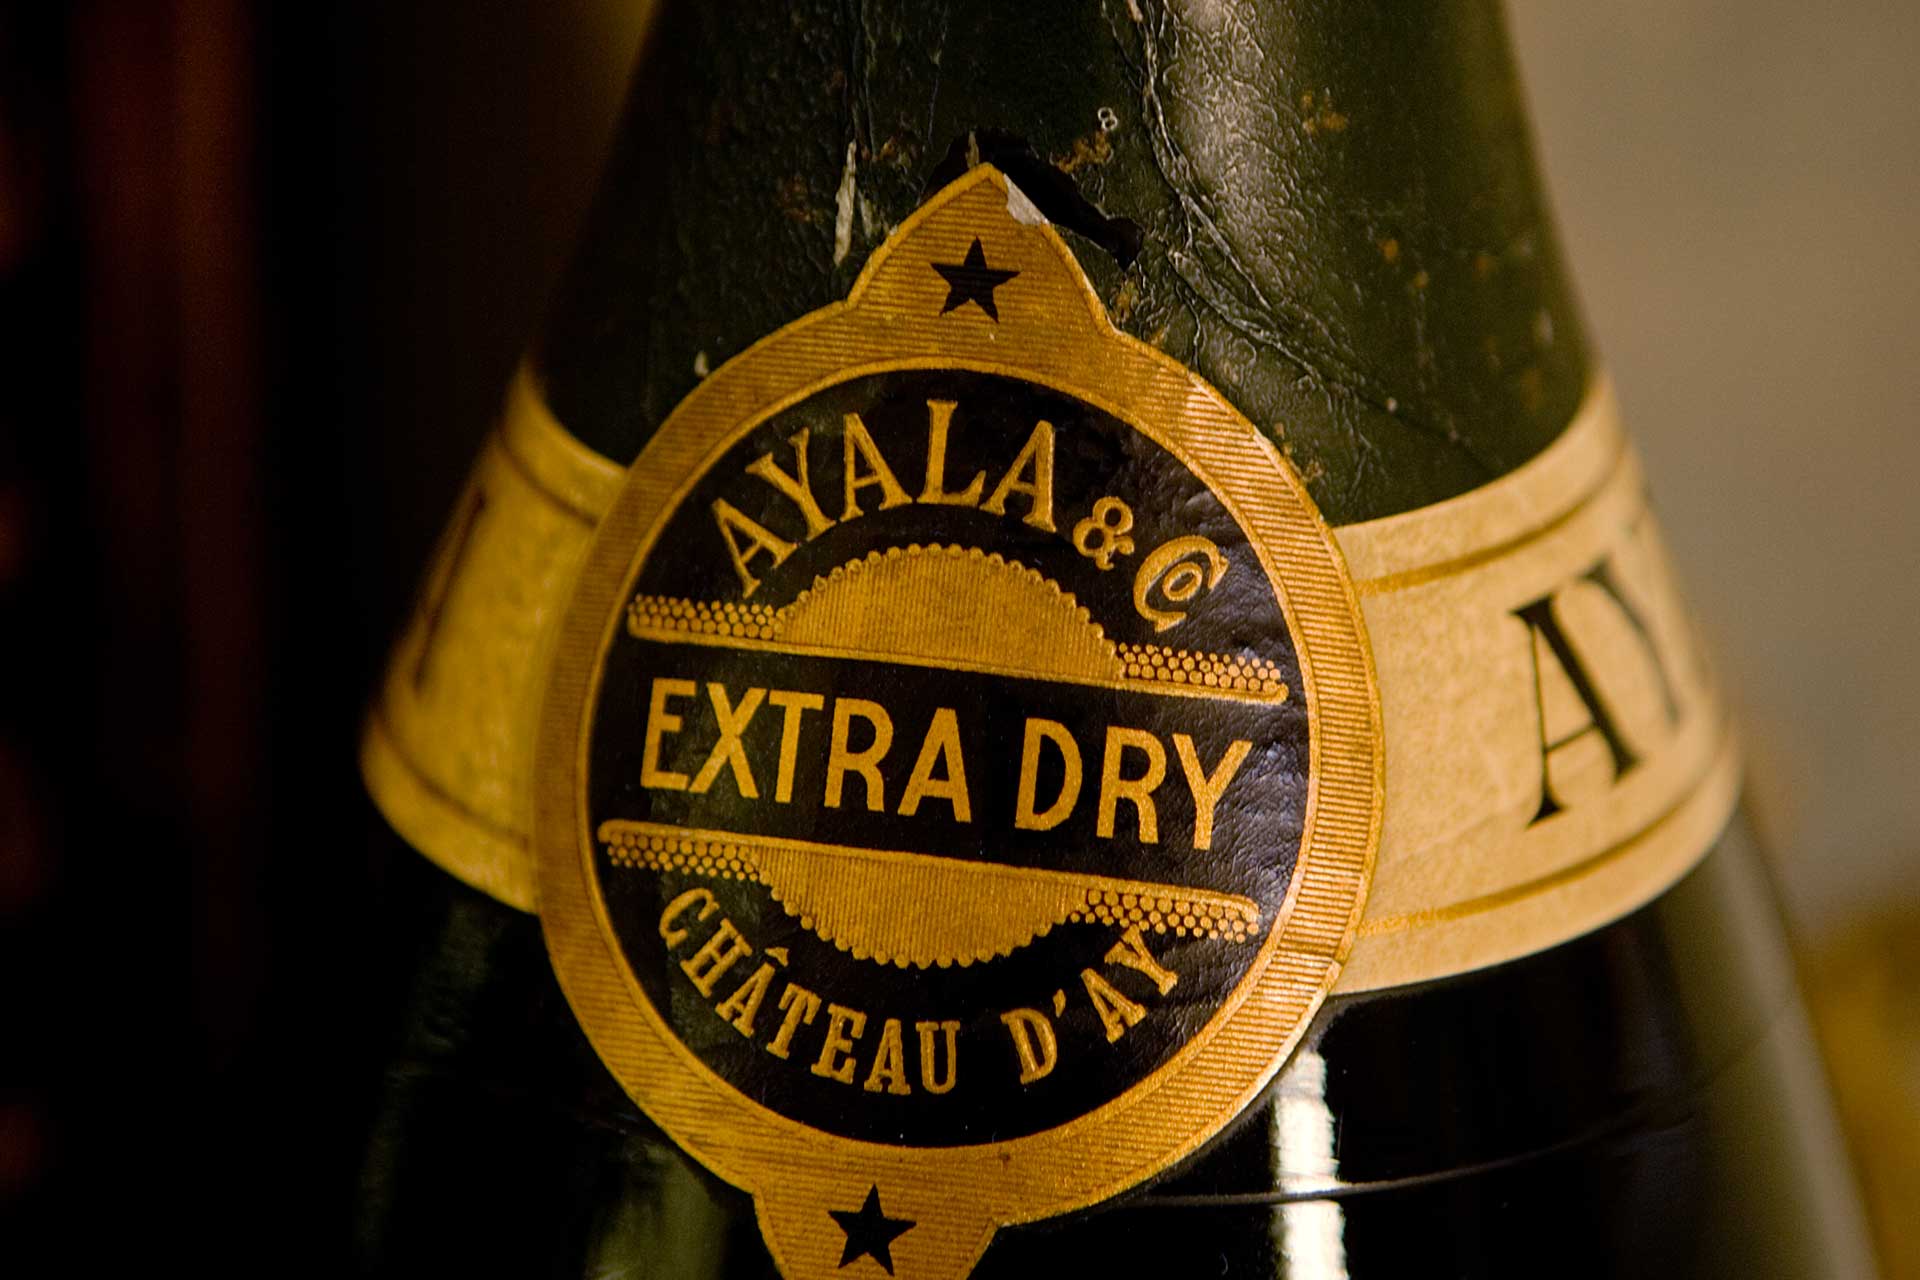 Ayala Historia del champán